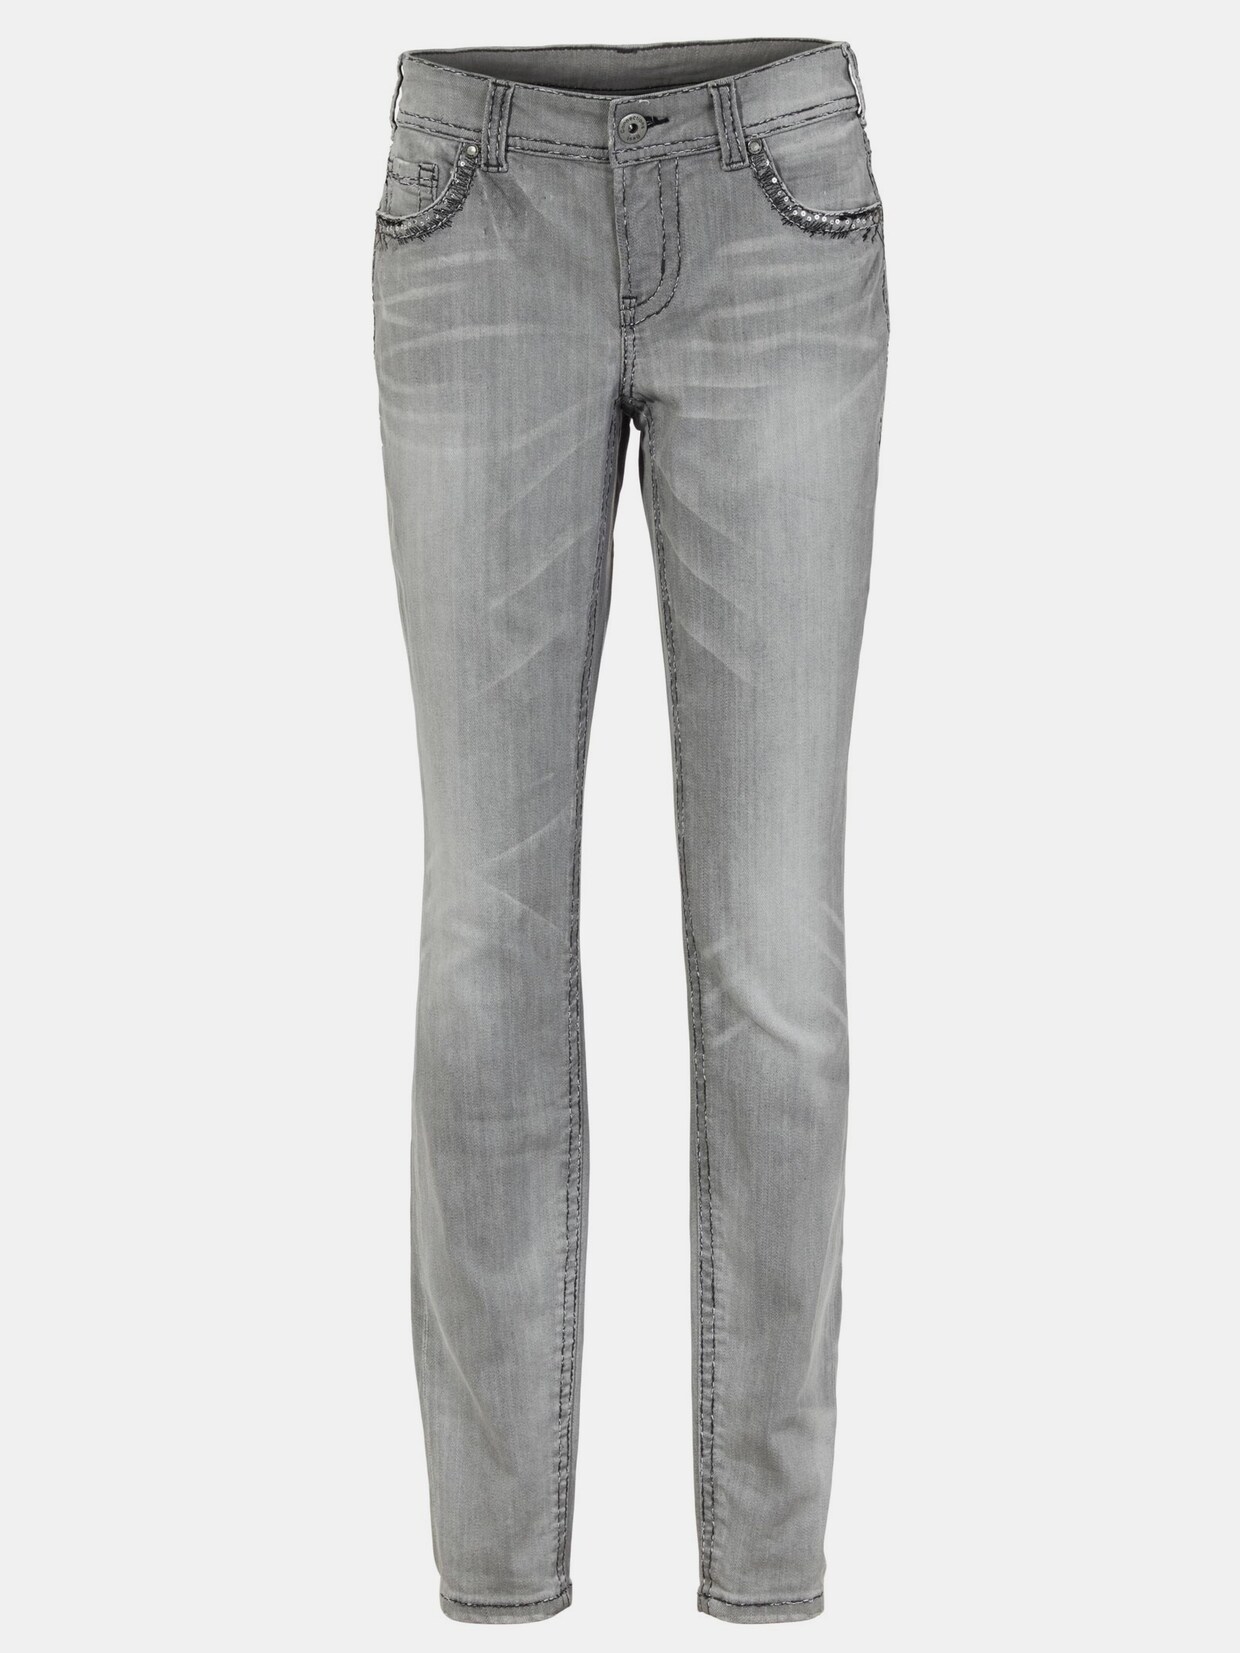 Rick Cardona 'Buik weg'-jeans - grey denim